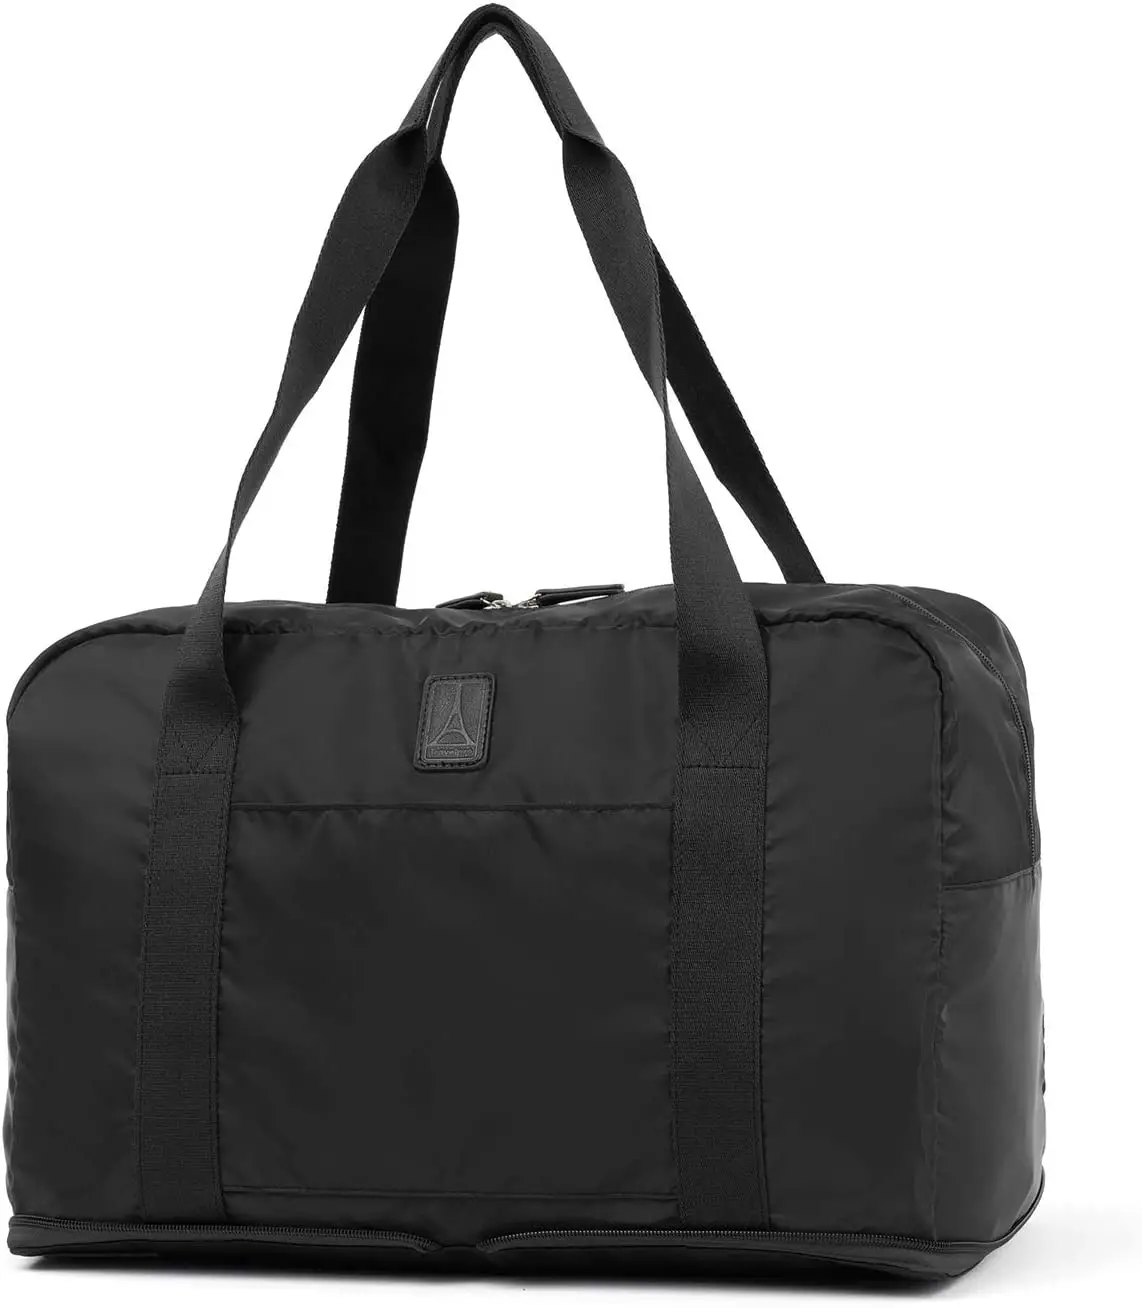 Travelpro Essentials – SparePack Foldable Duffel Bag